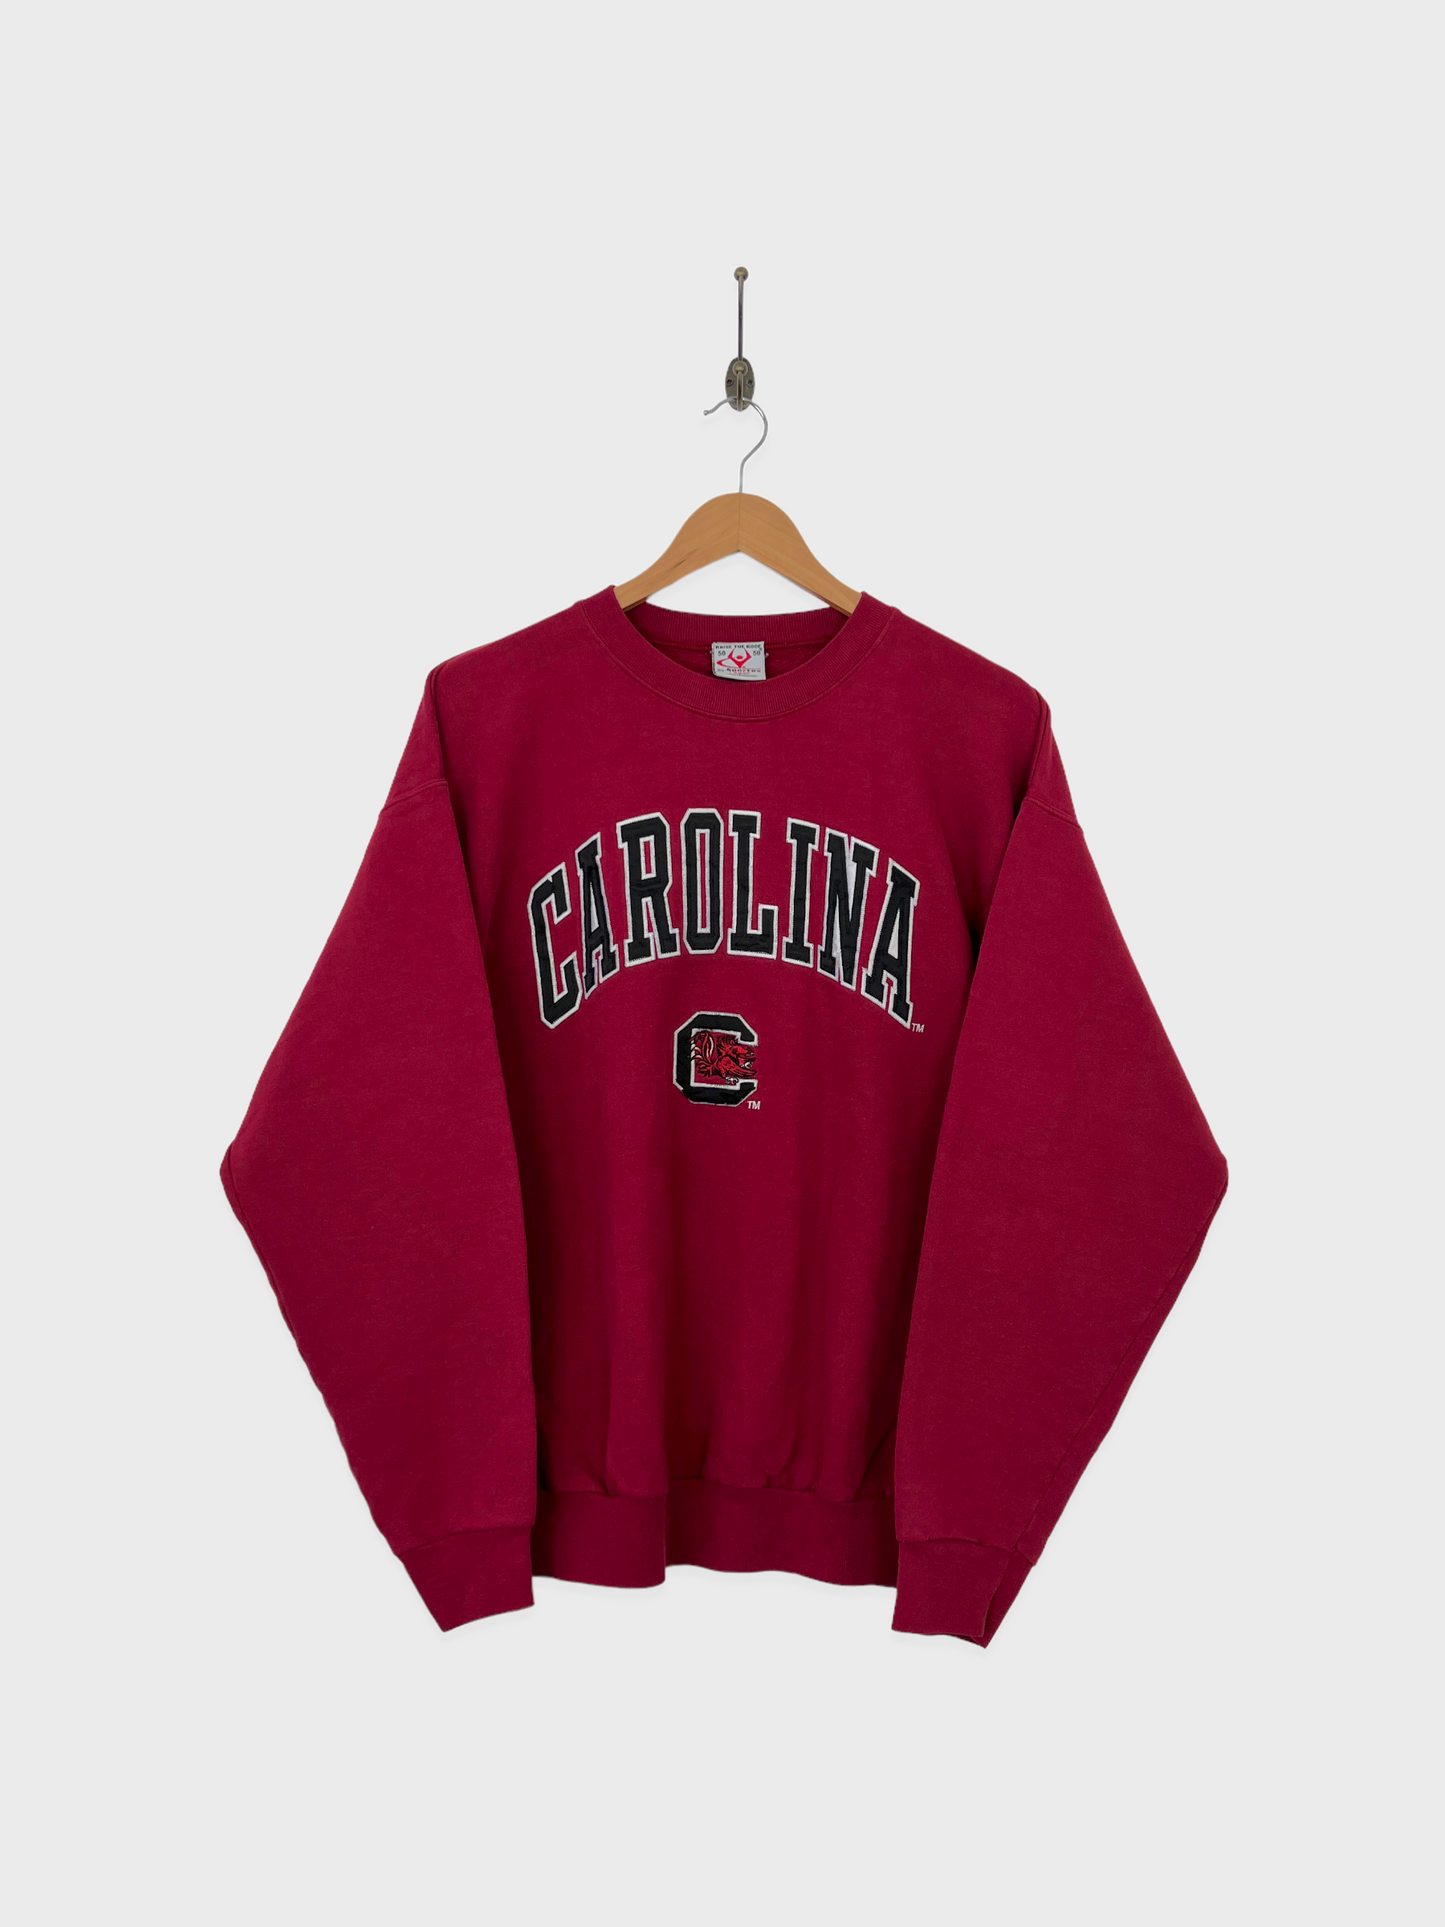 90's South Carolina Uni Embroidered Vintage Sweatshirt Size 10